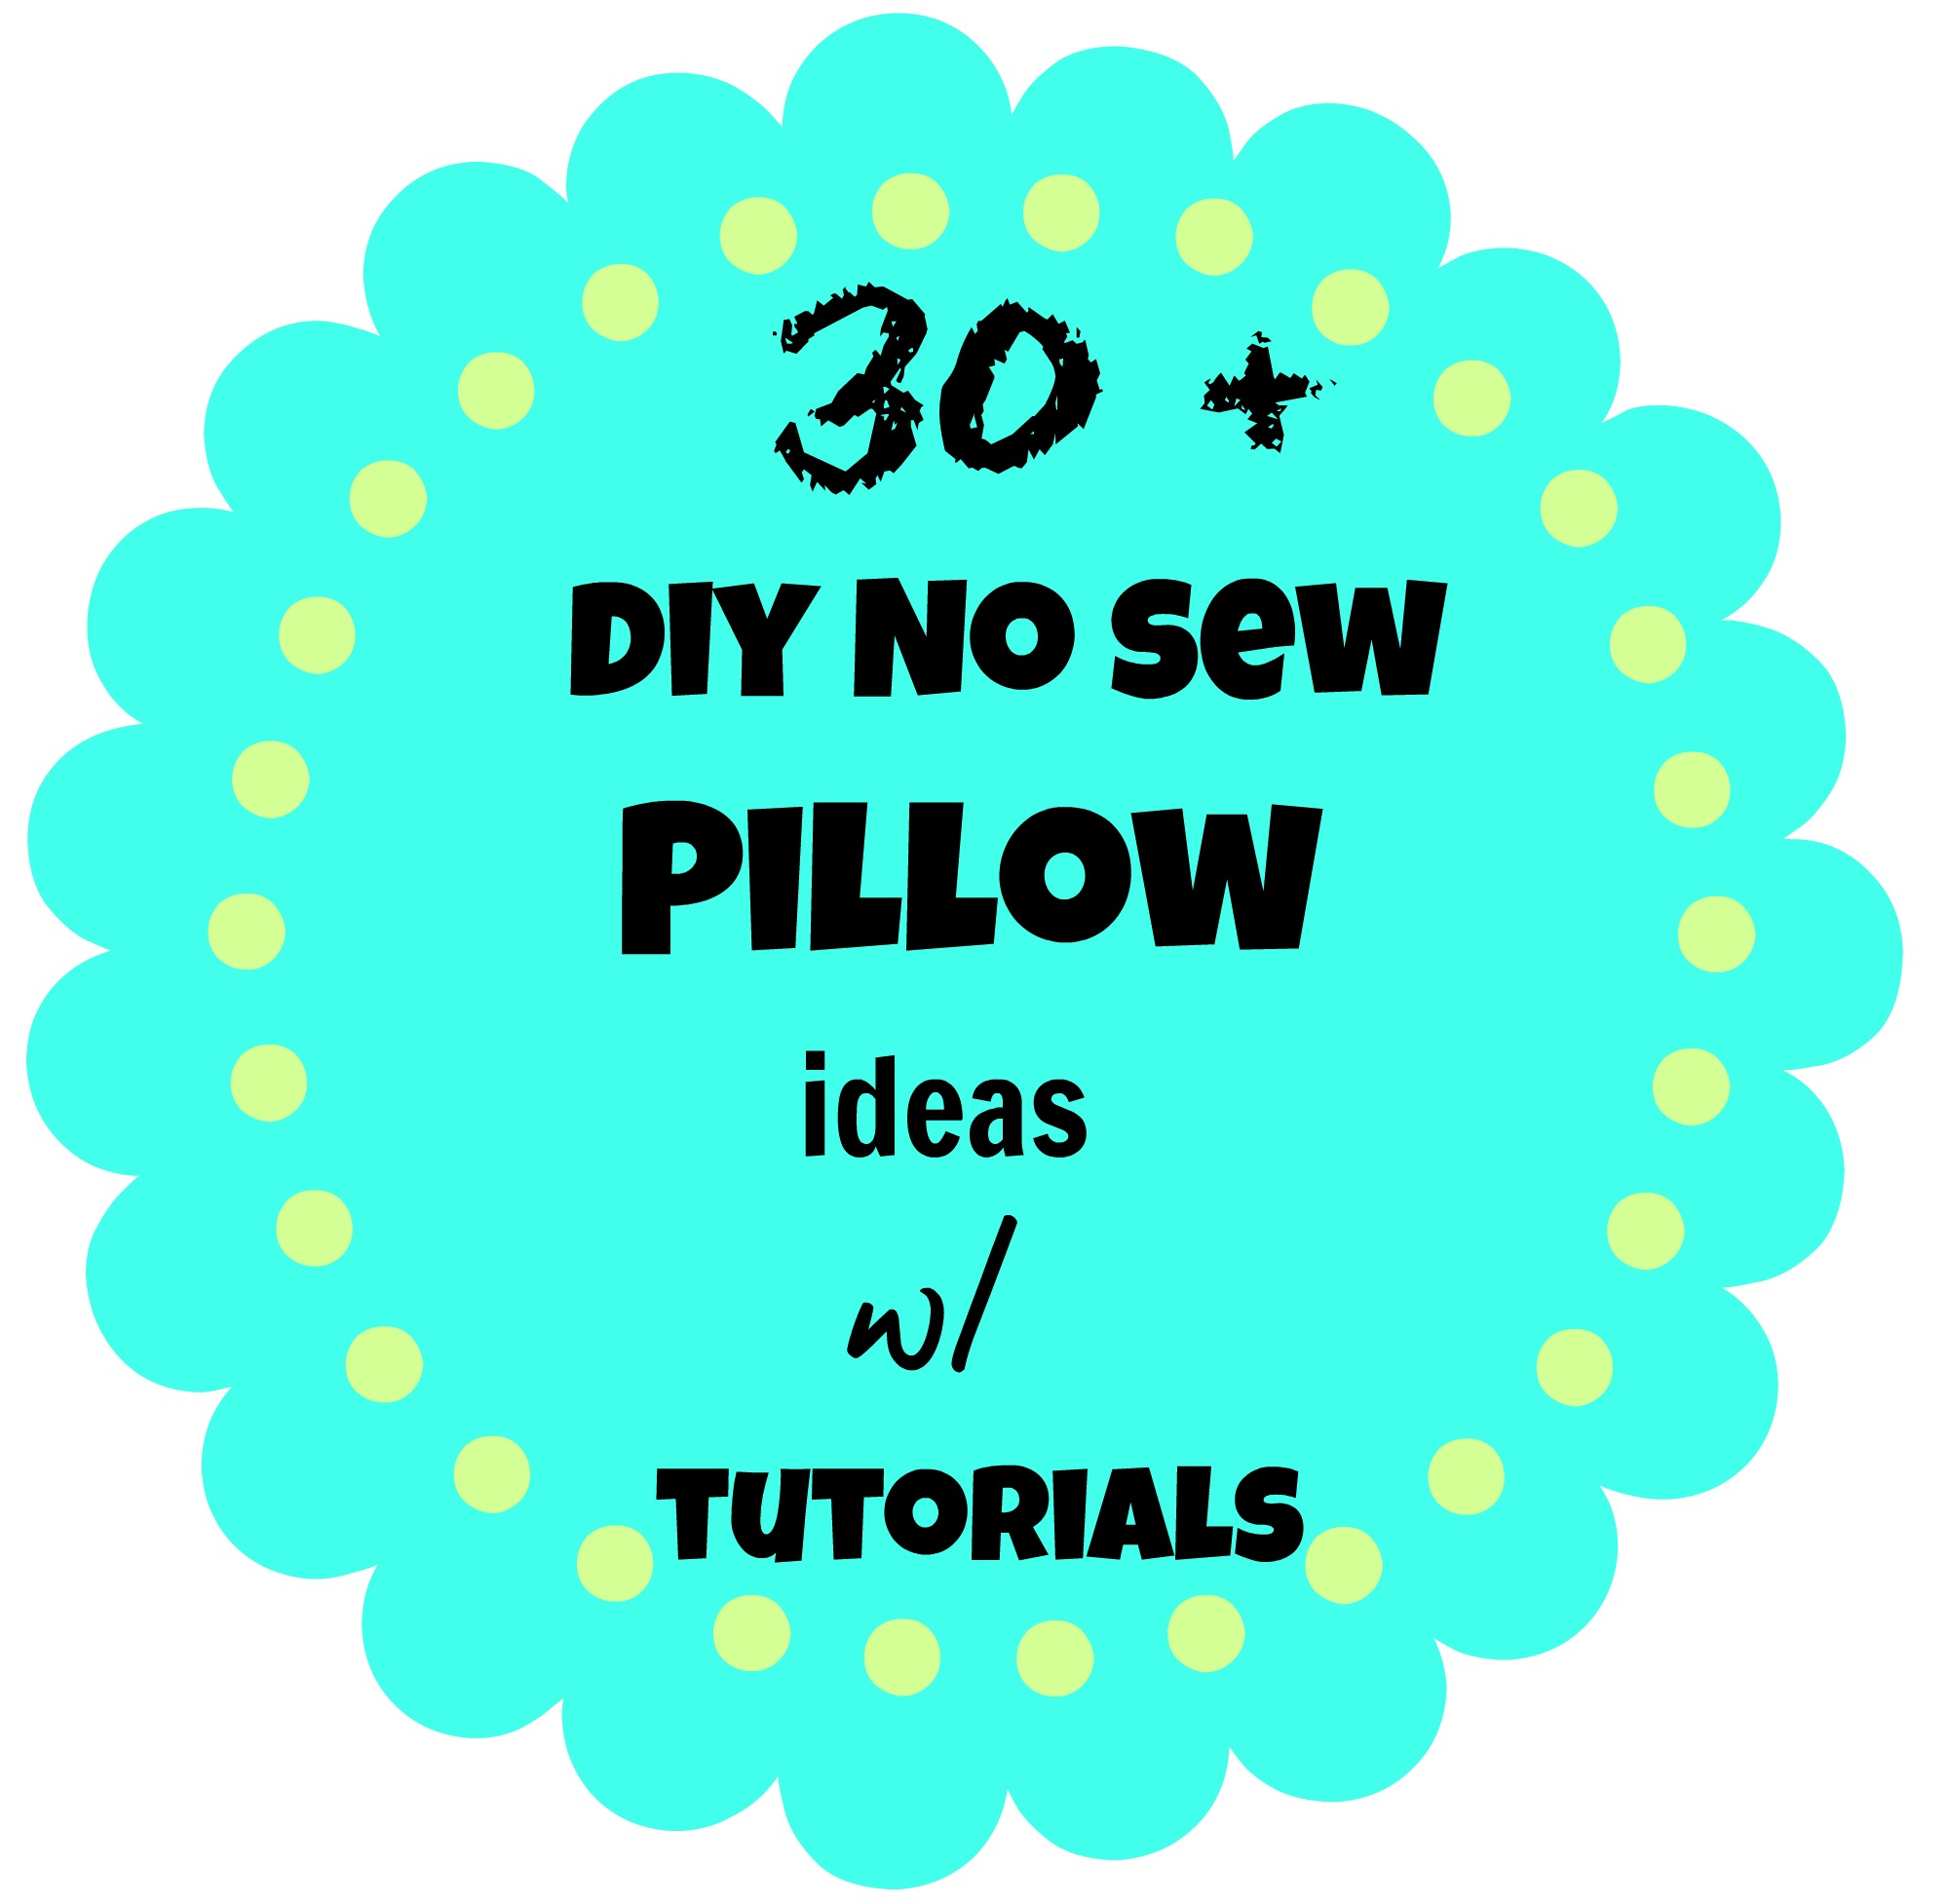 diy no sew pillow ideas